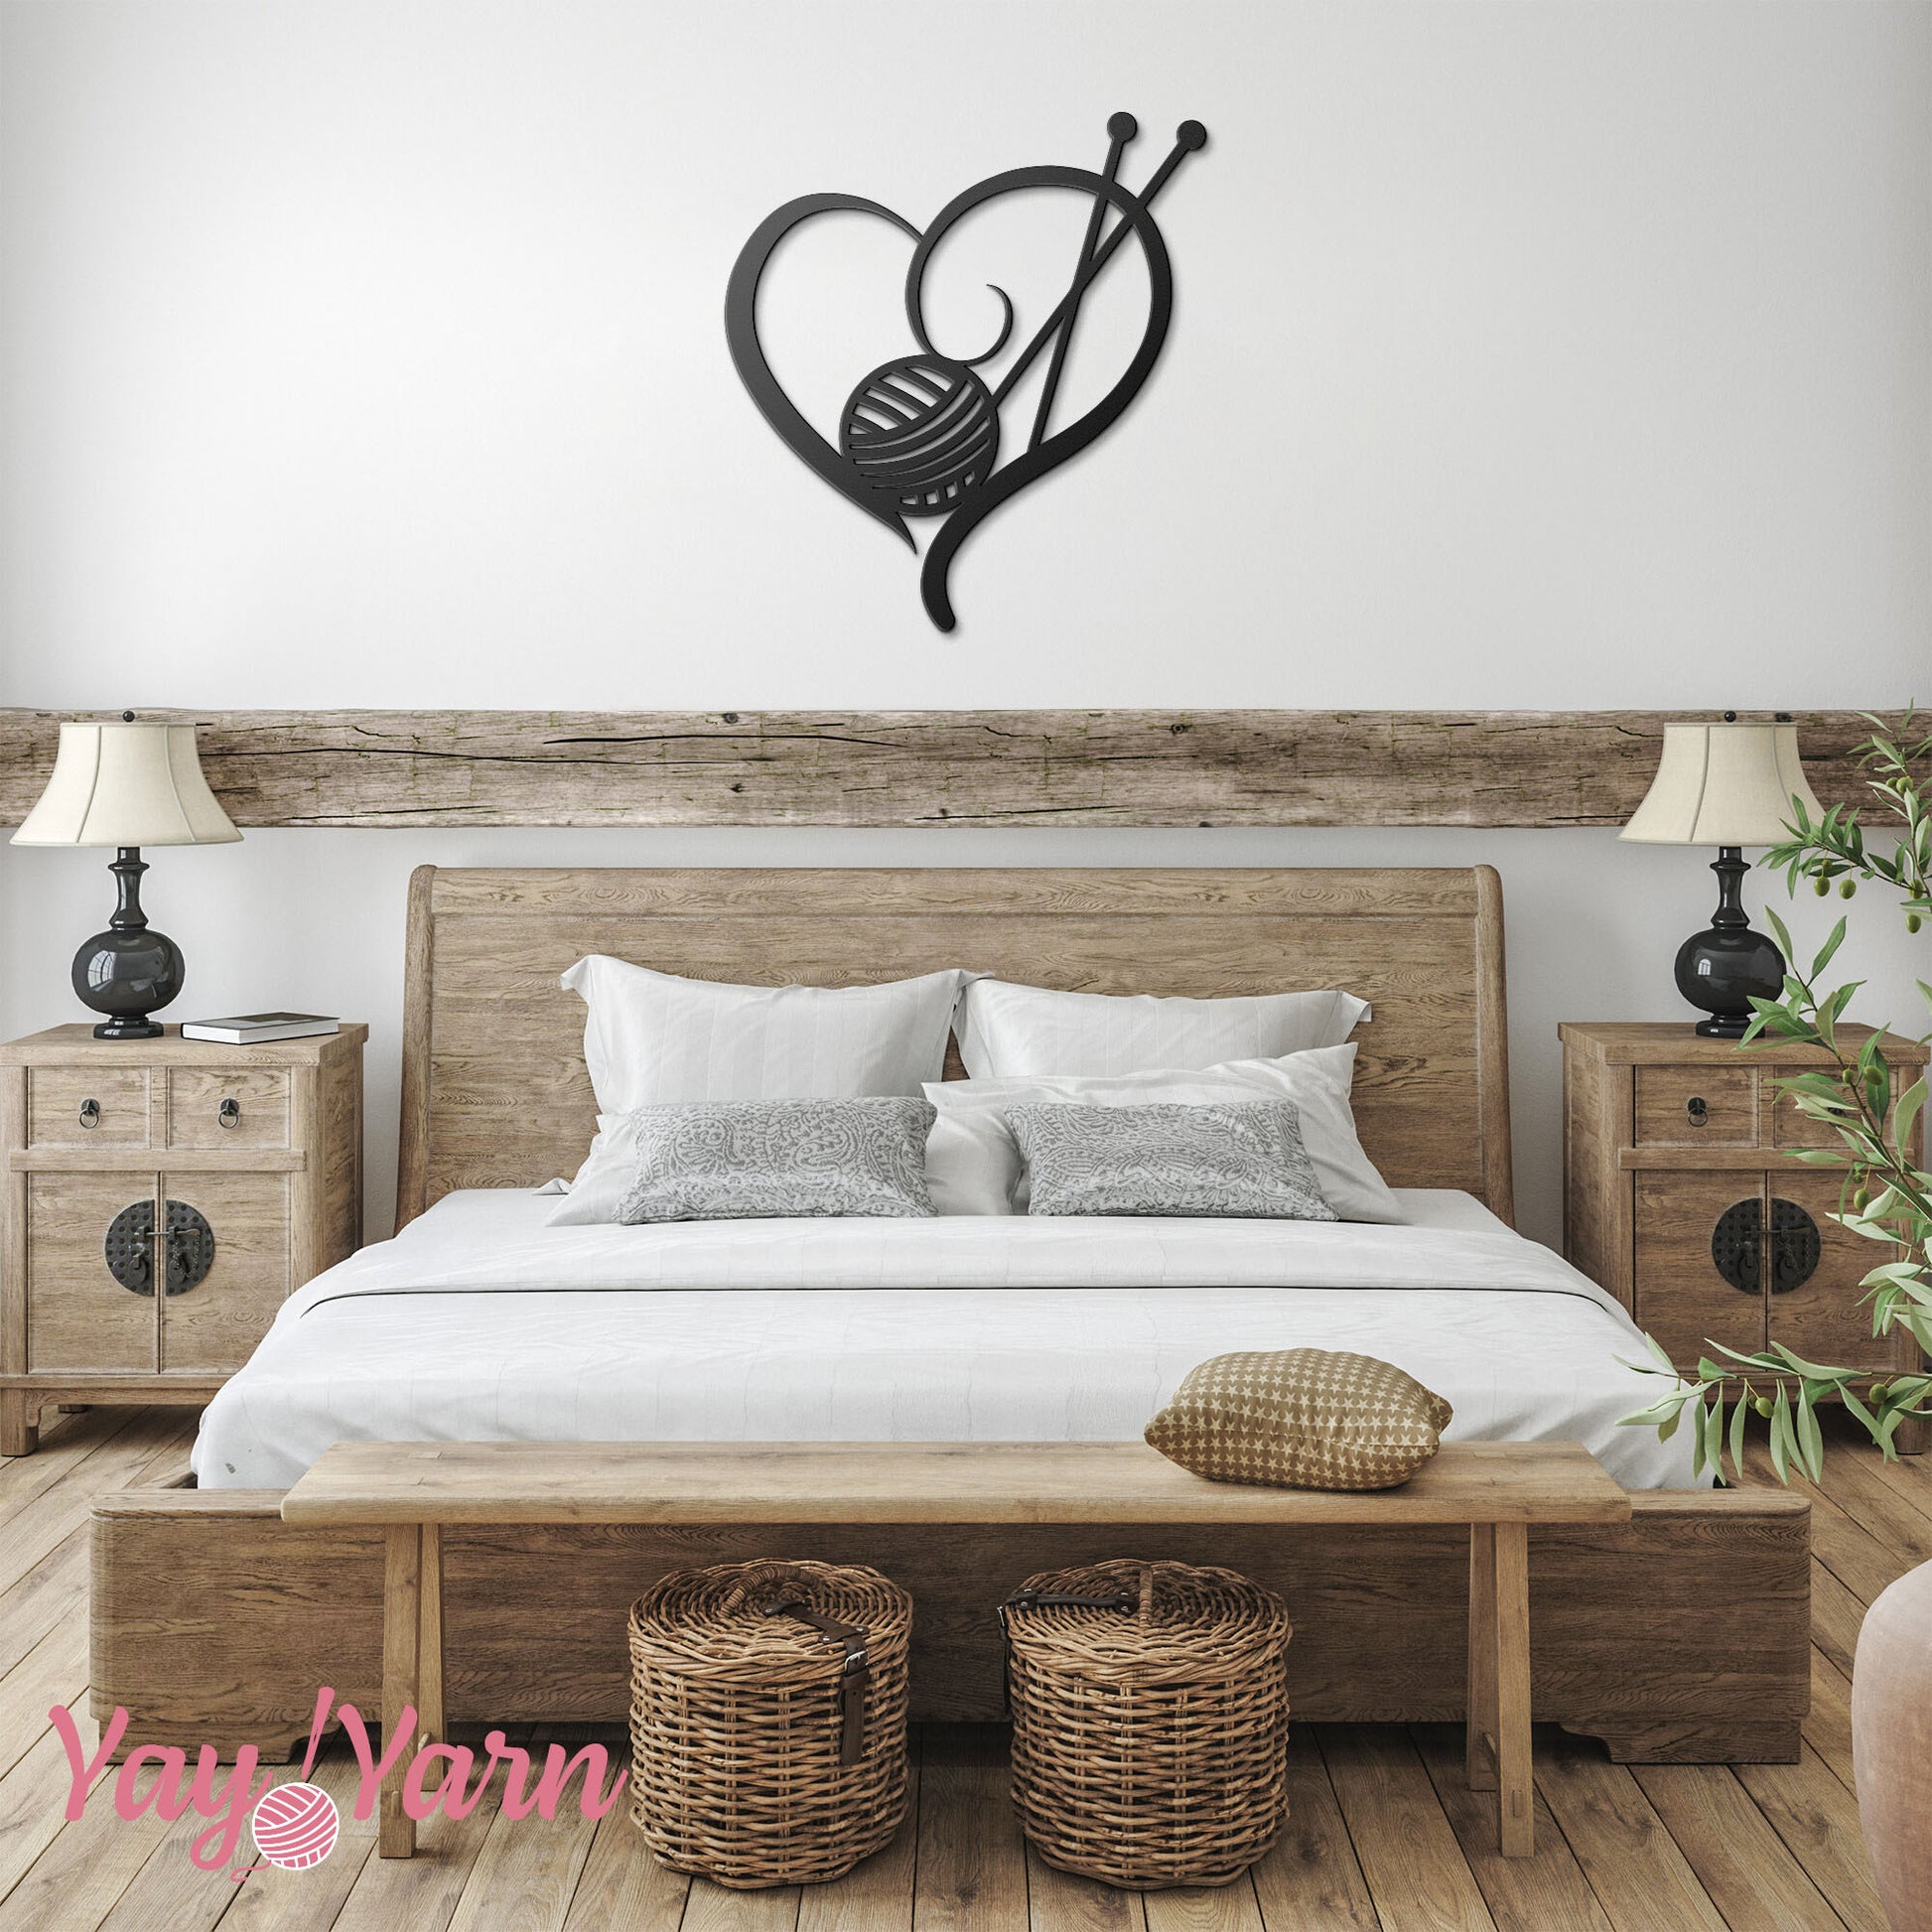 Knit Heart Metal Wall Art Black on White Wall Boho Bedroom